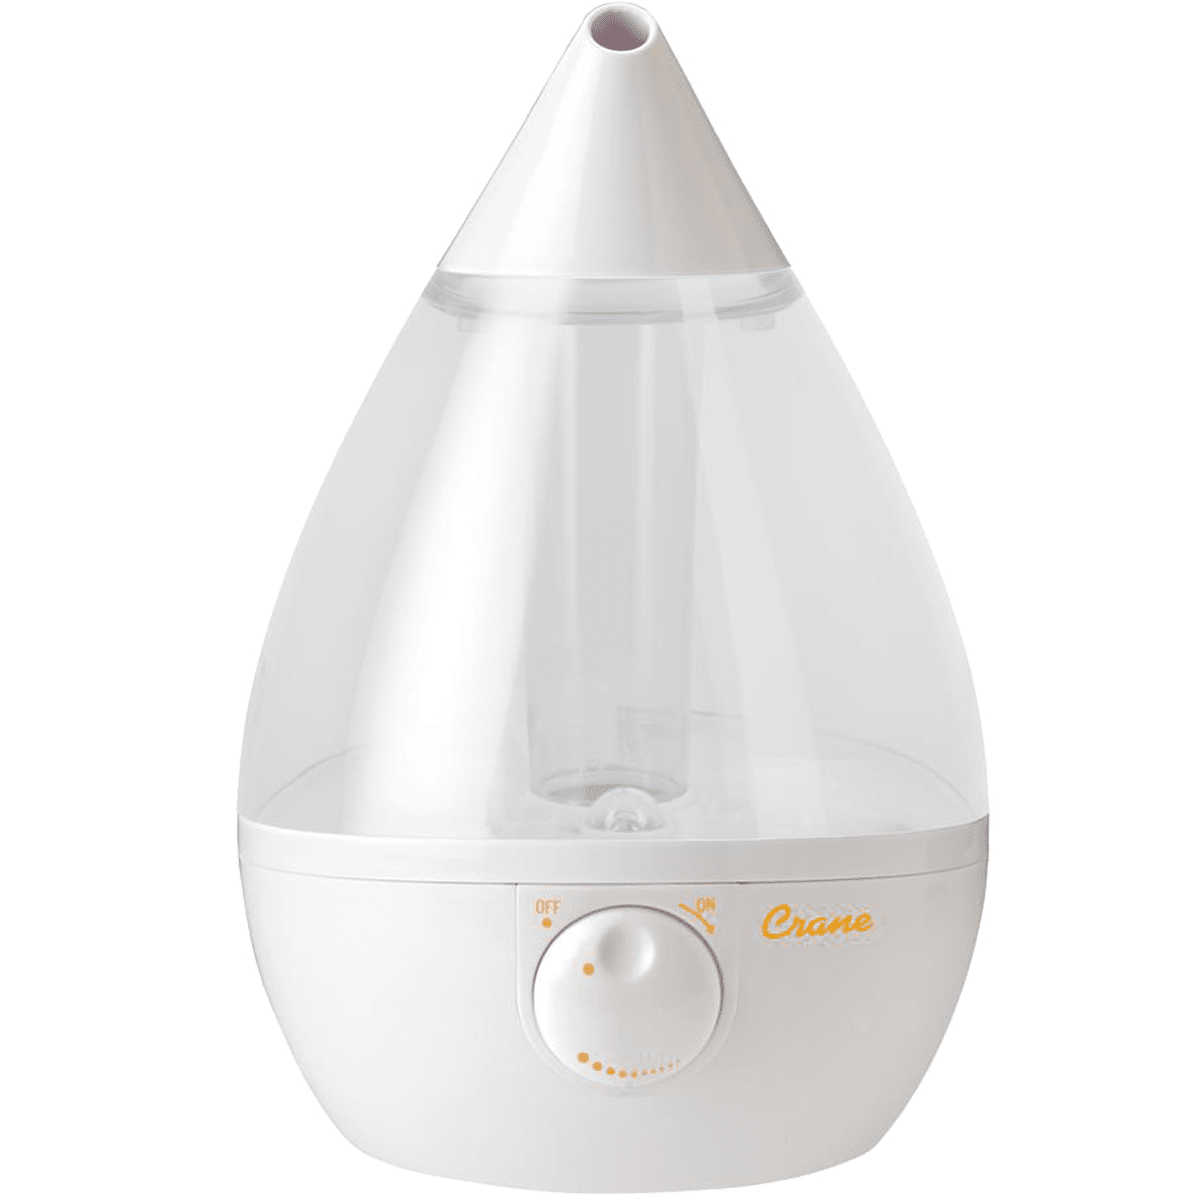 Crane Drop Cool Mist Humidifier - Clear/white